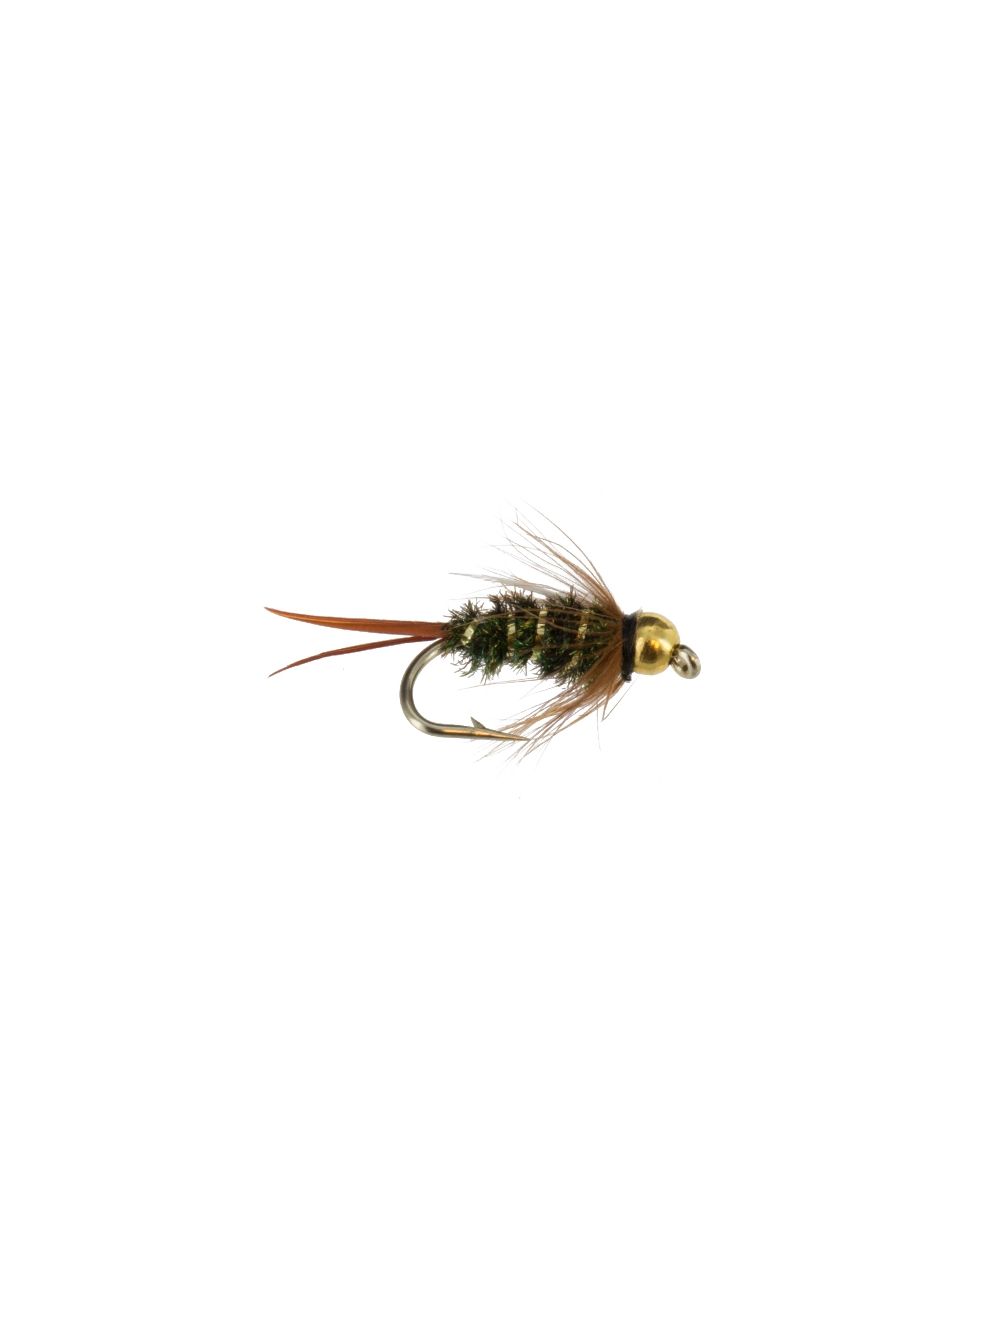 https://www.theflystop.com/media/catalog/product/cache/32b930e20bfef0c9badd7ee253a86131/b/e/beadhead-prince-fly-fishing-flies-nymphs_1.jpg